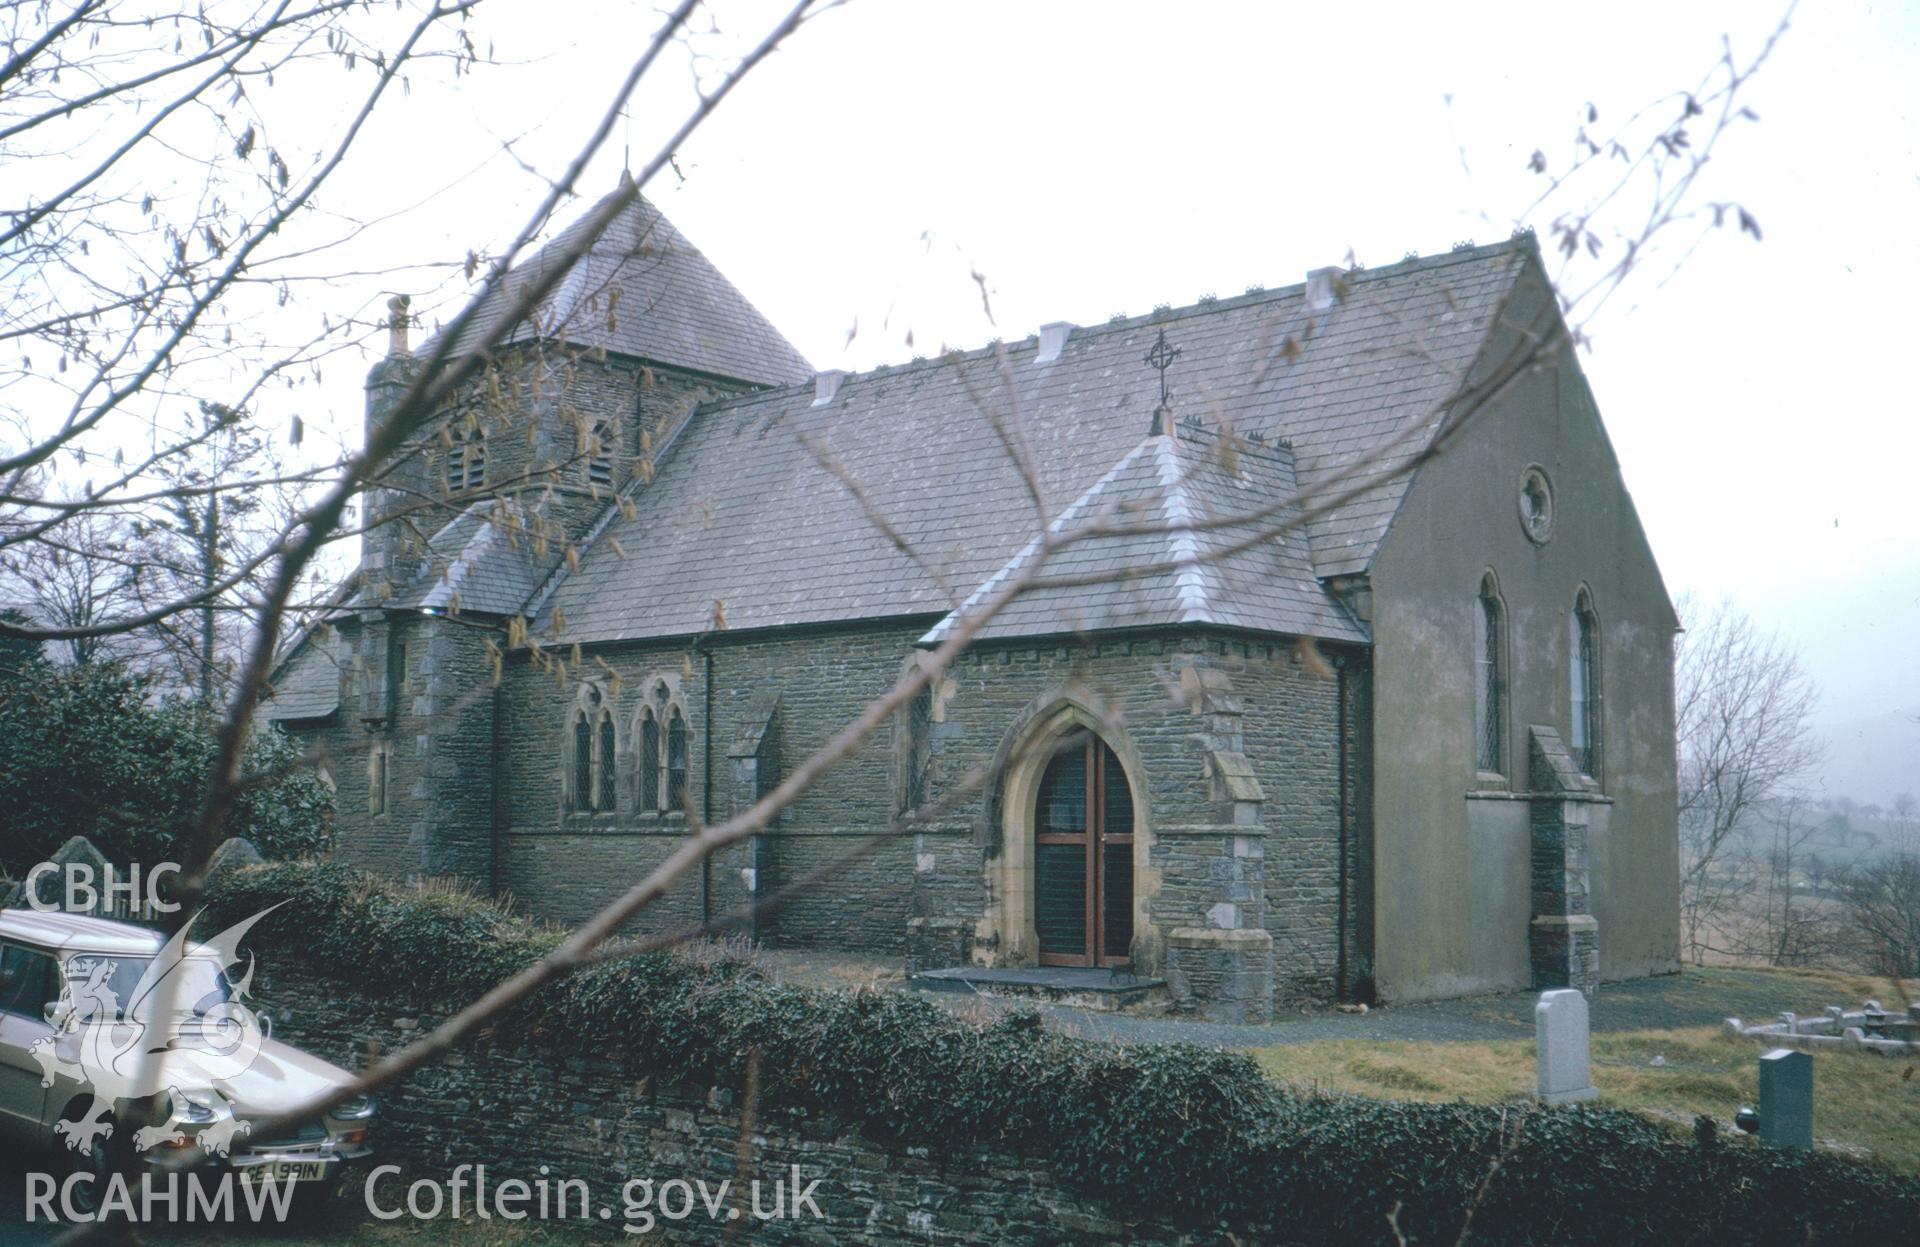 Colour slide showing exterior view of St Peter's Church, Elerch.